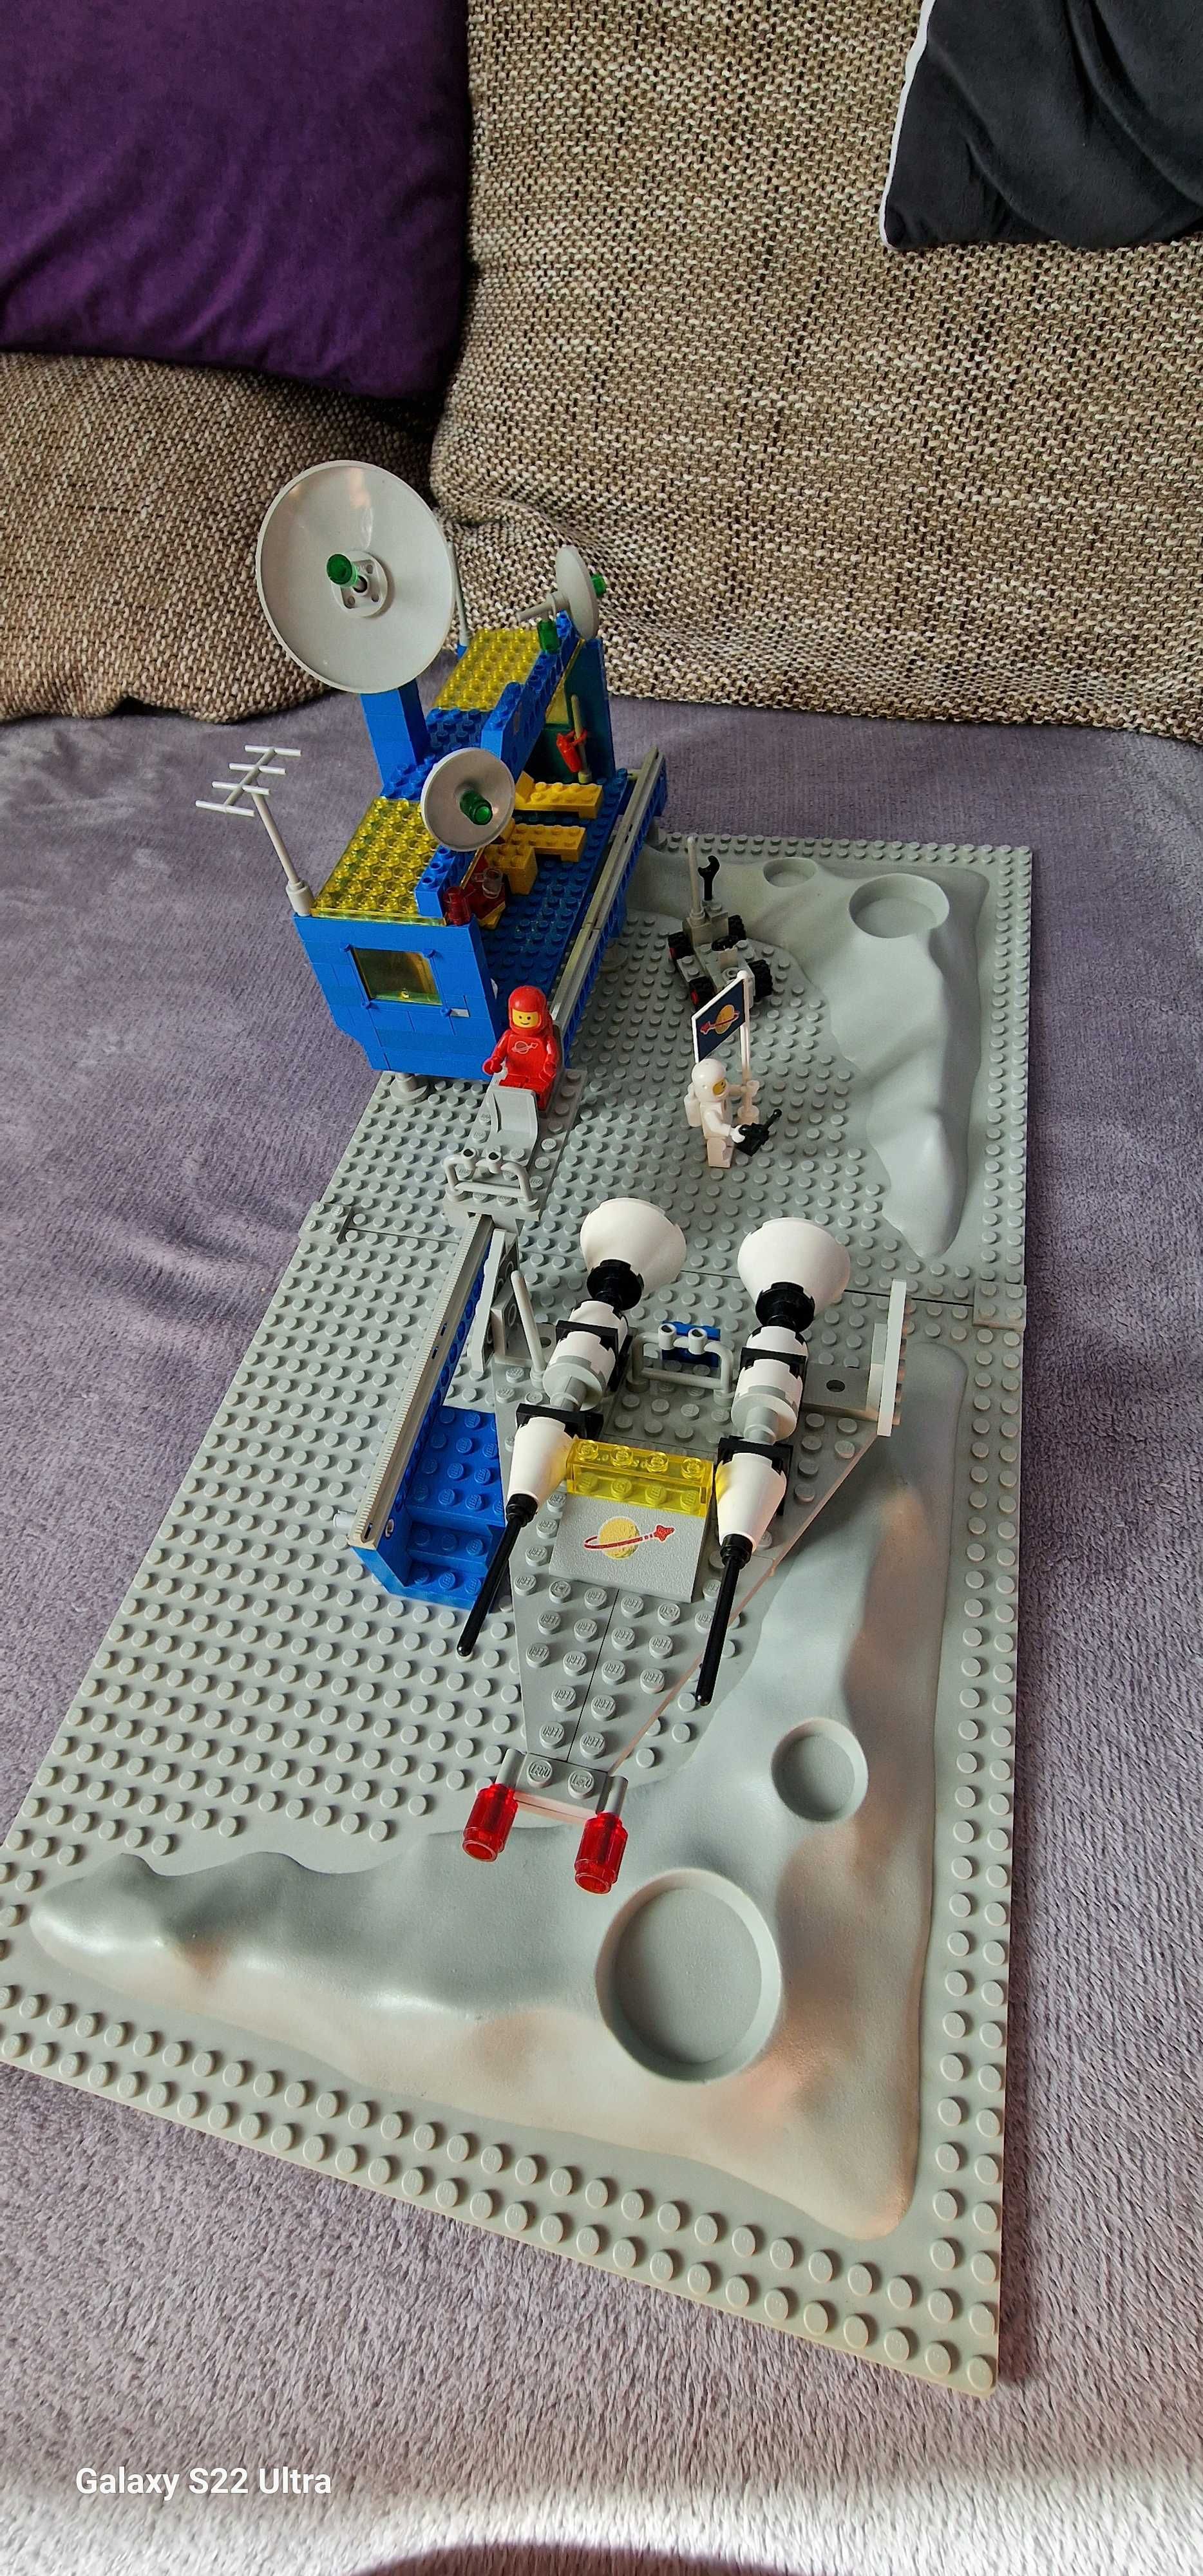 Lego 6970 - Beta-1 Command Base - an 1980